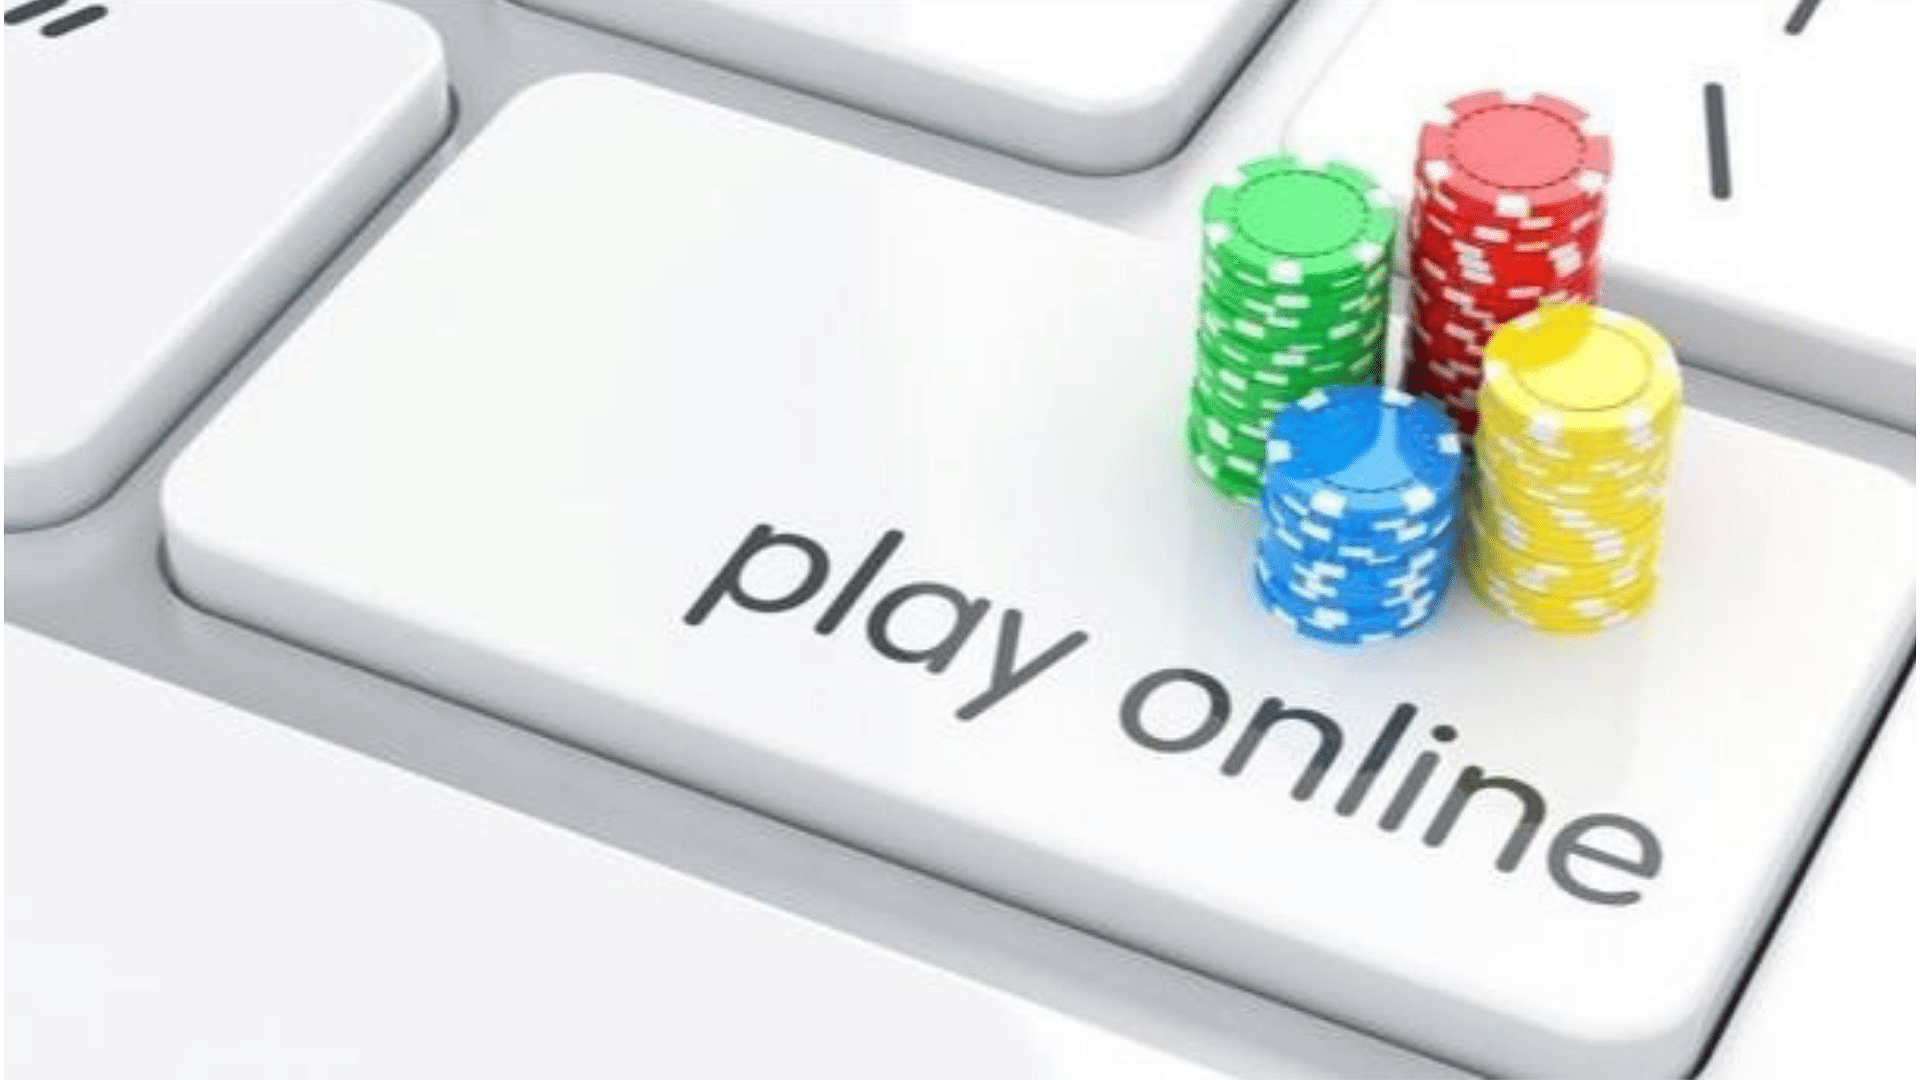 Illegal online betting is a big frenzy in Turkey